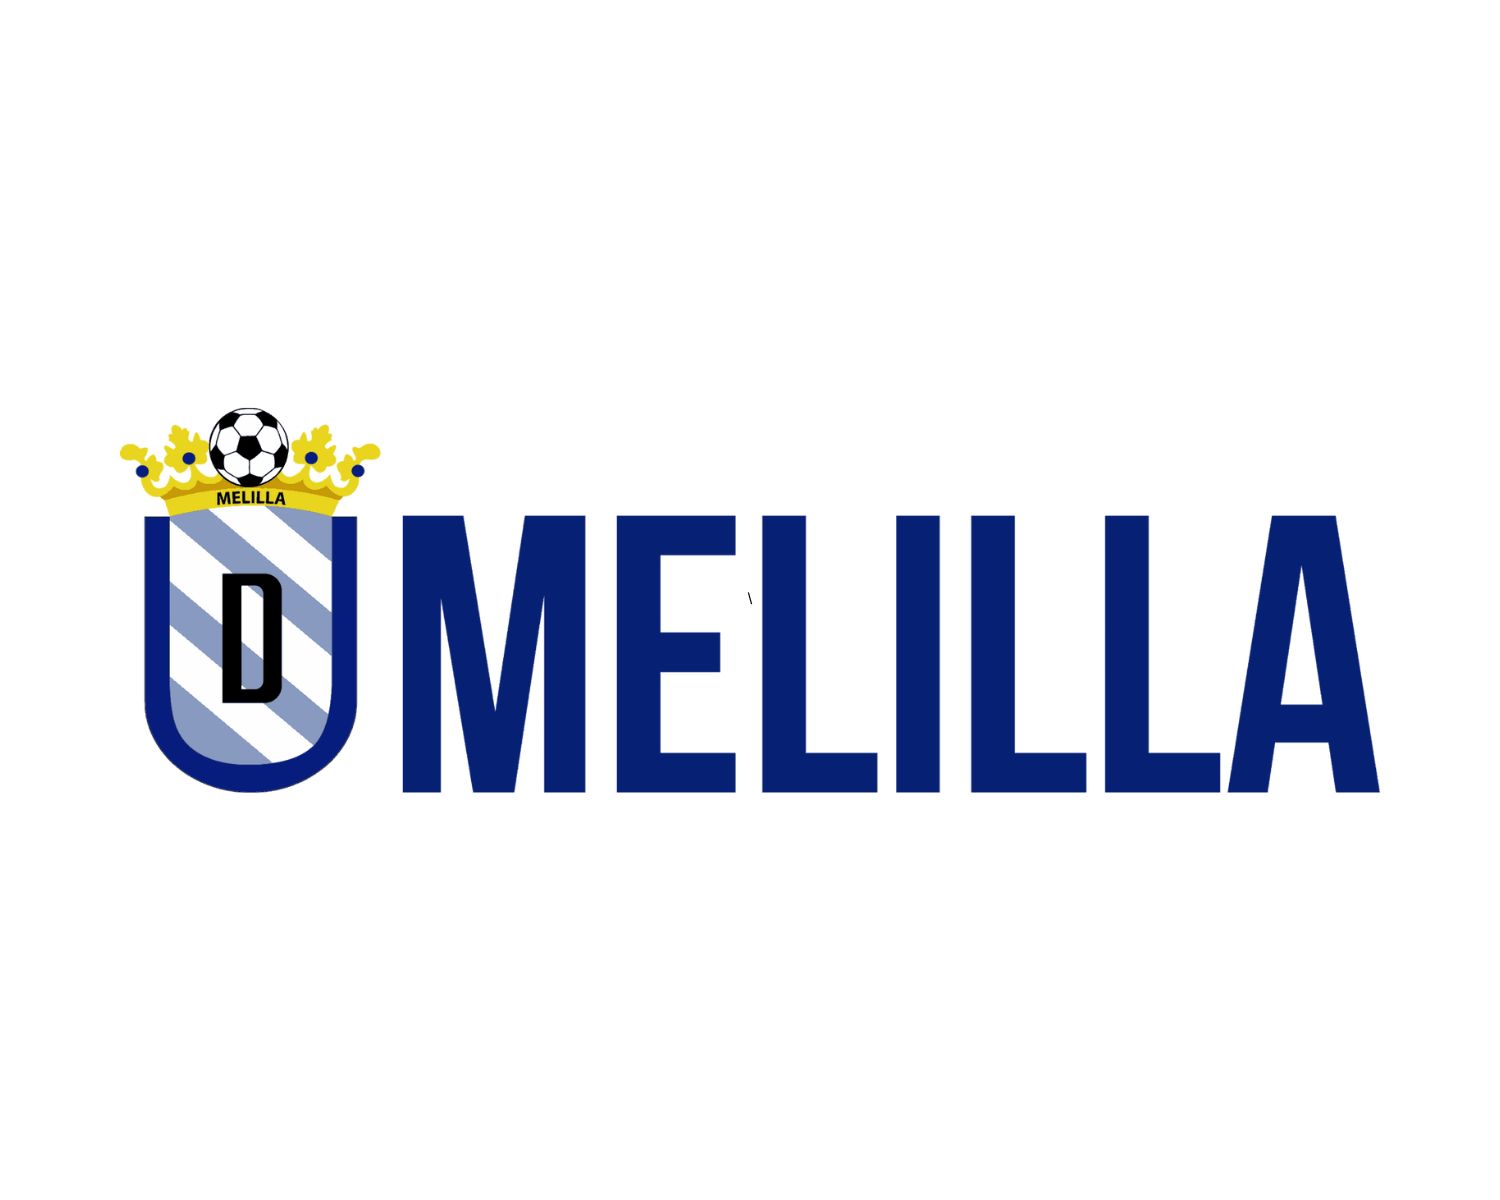 ud-melilla-19-football-club-facts